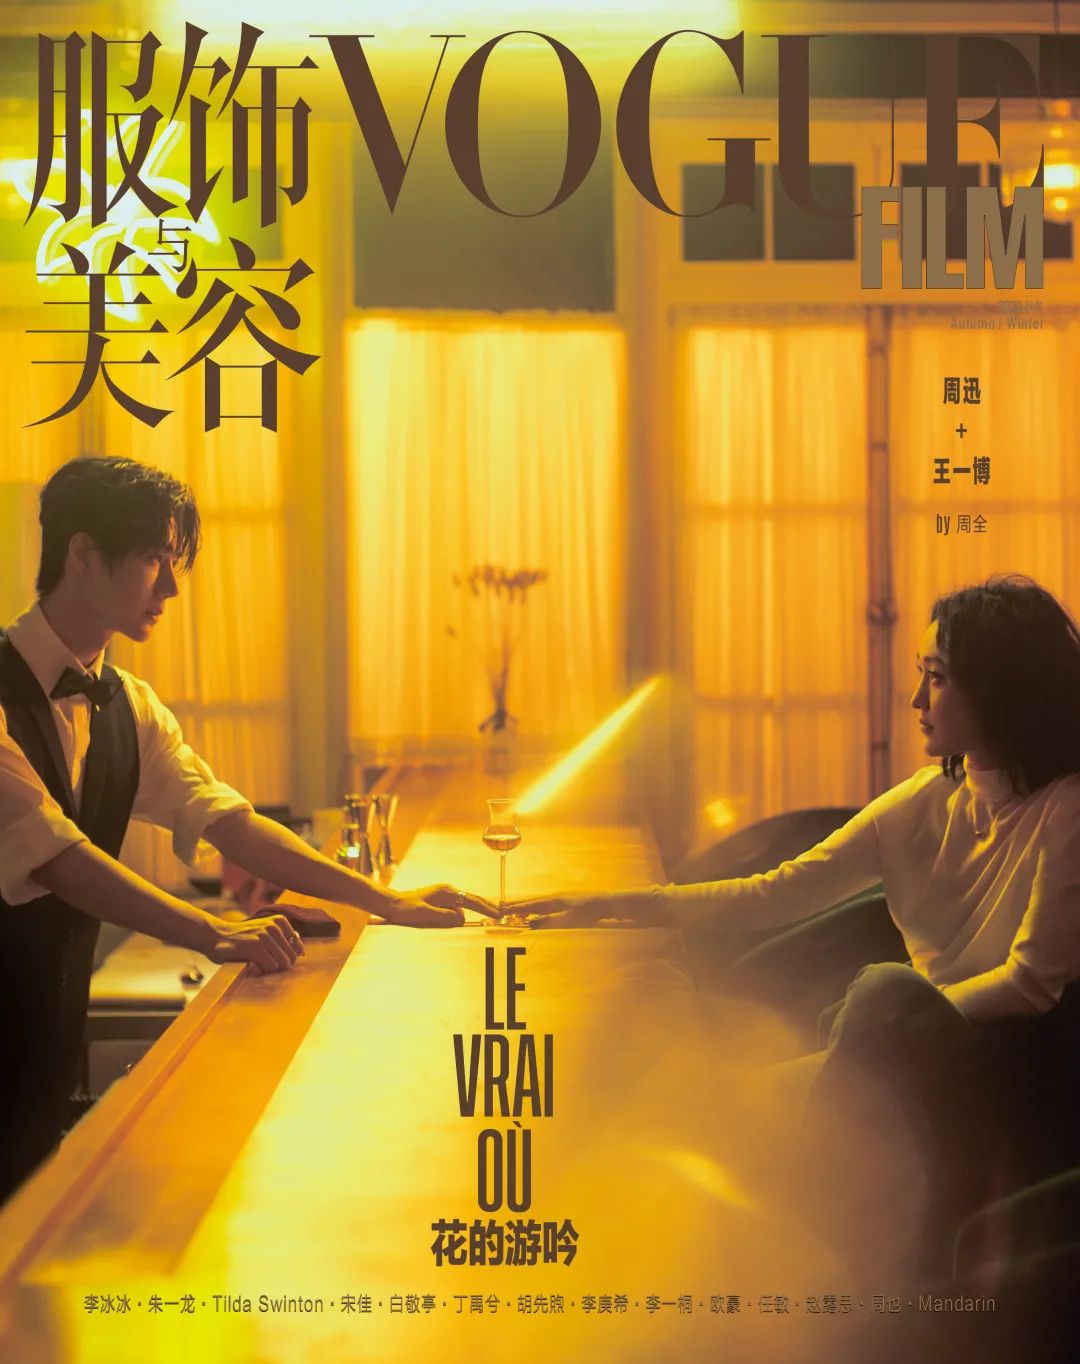 Vogue Film「花的游吟」，周迅、王一博主演